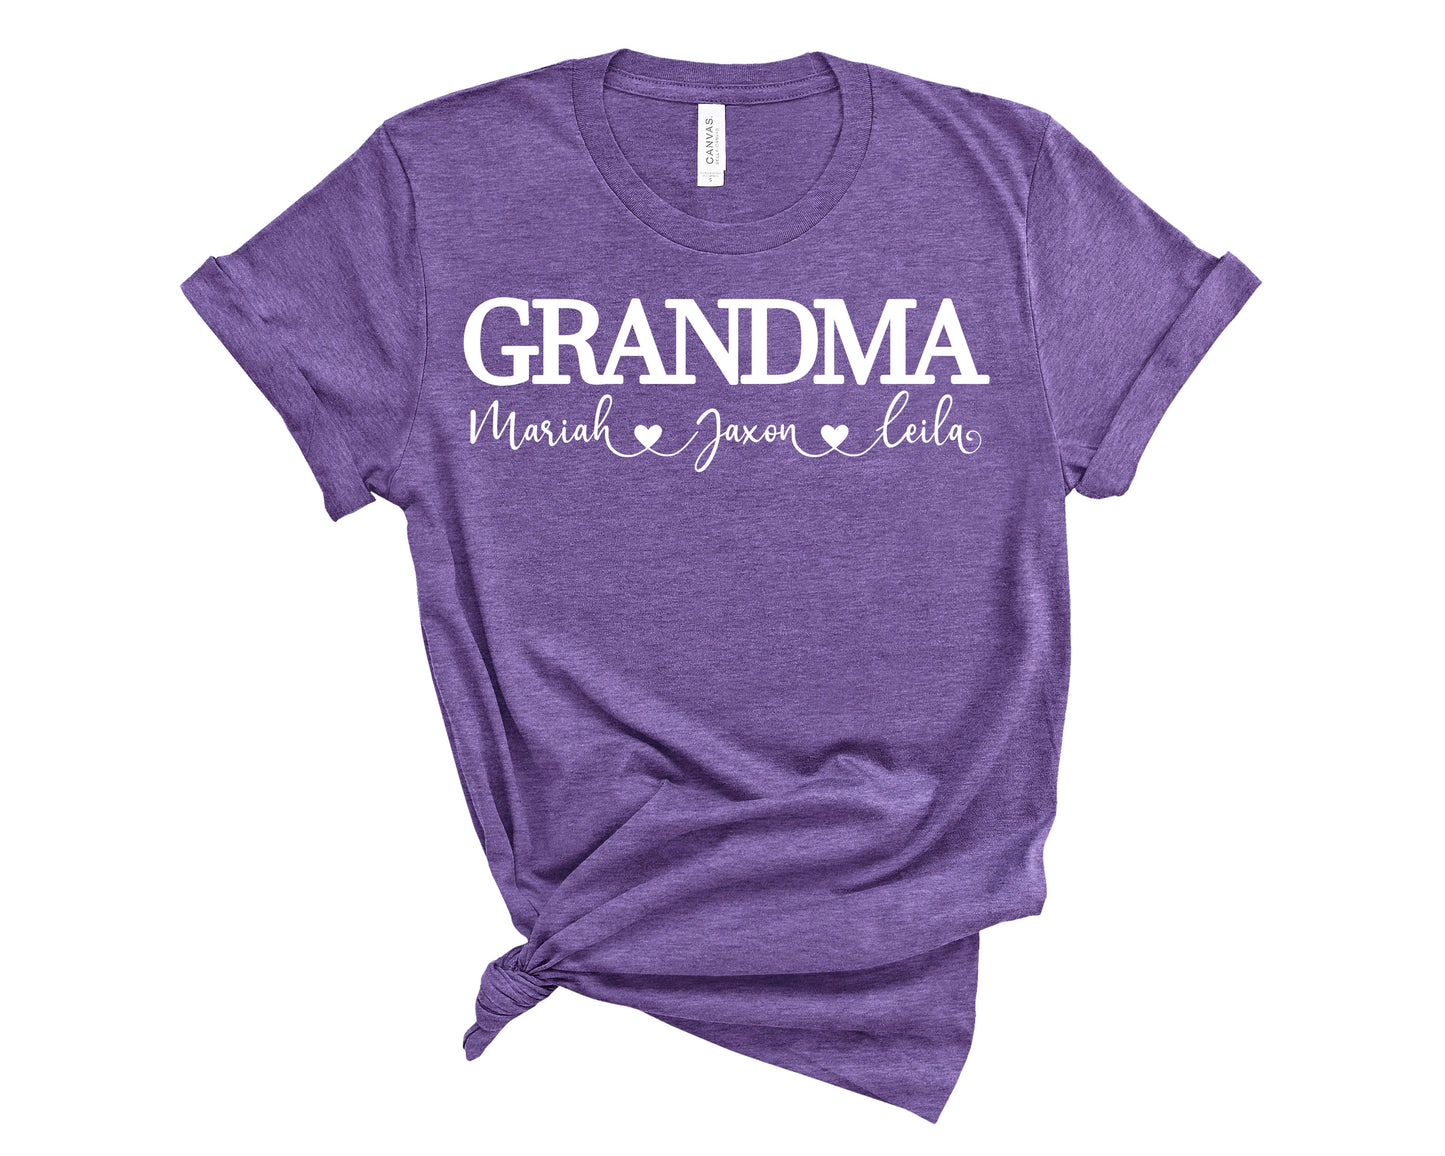 Personalized Grandma T-shirt